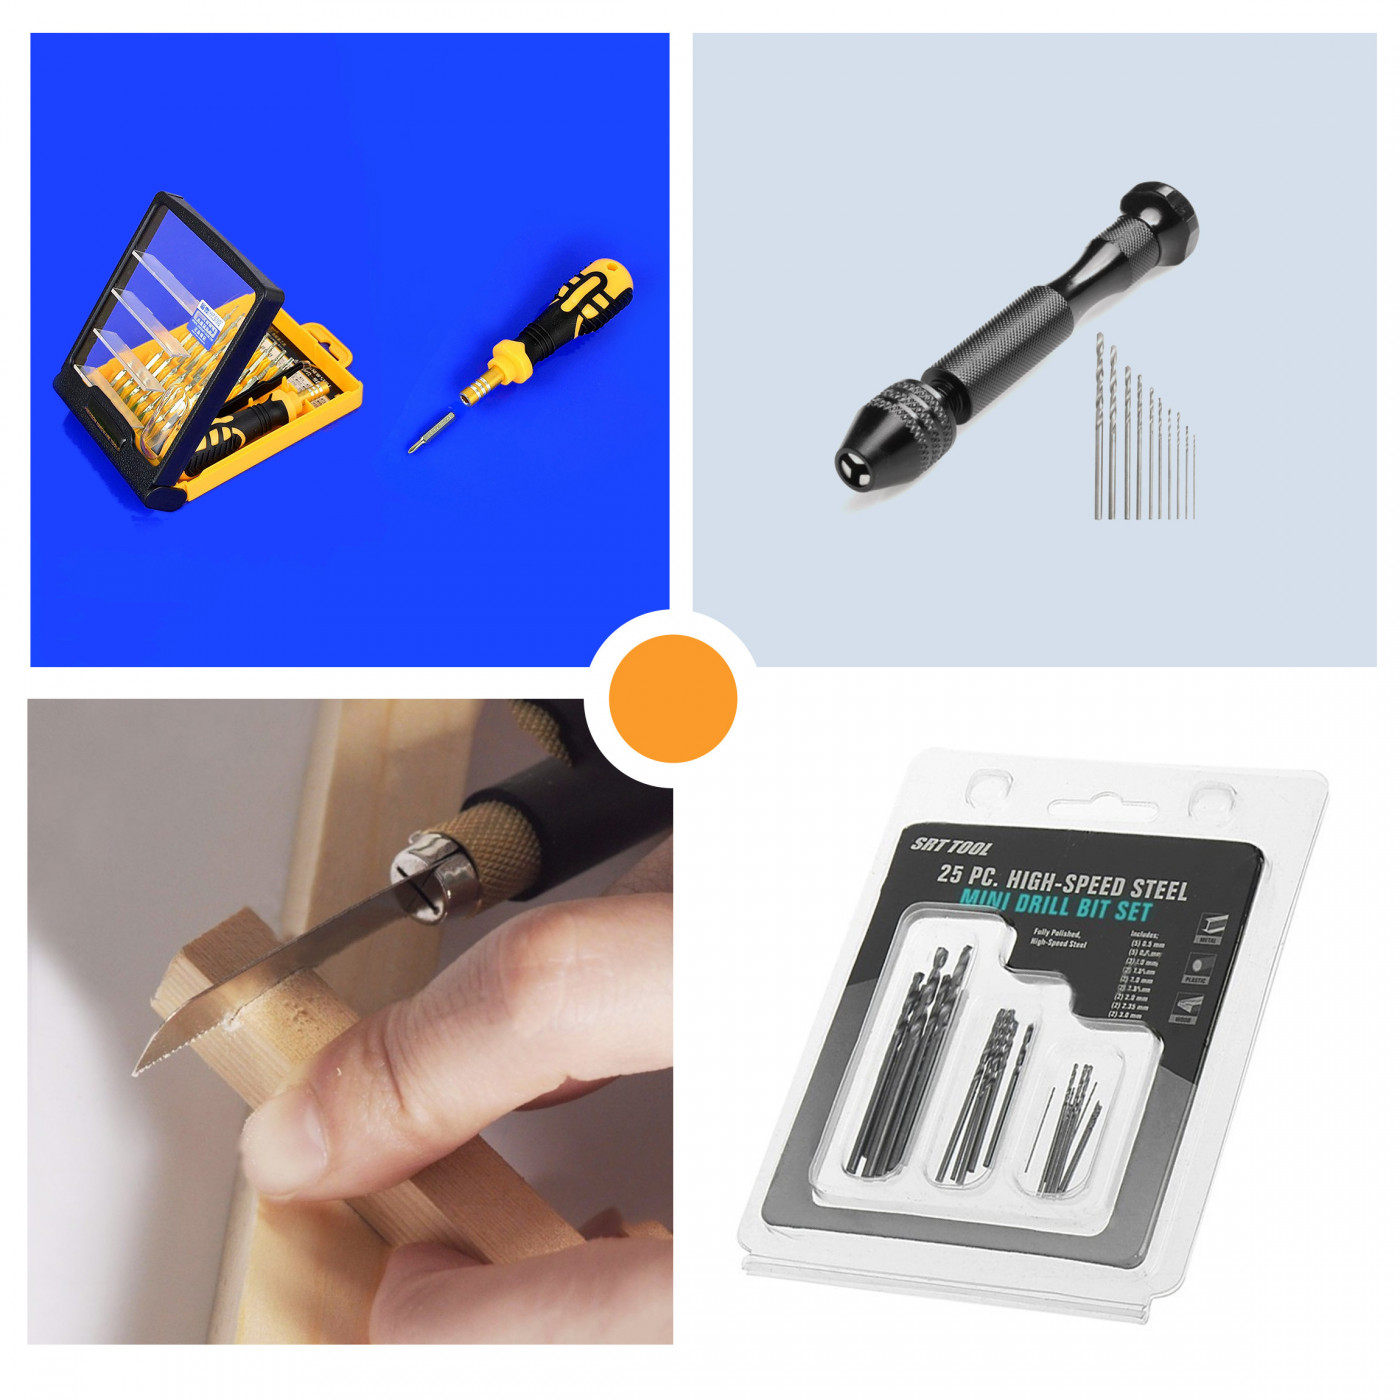 Conjunto de 3 mini herramientas: tornillo, taladro y sierra